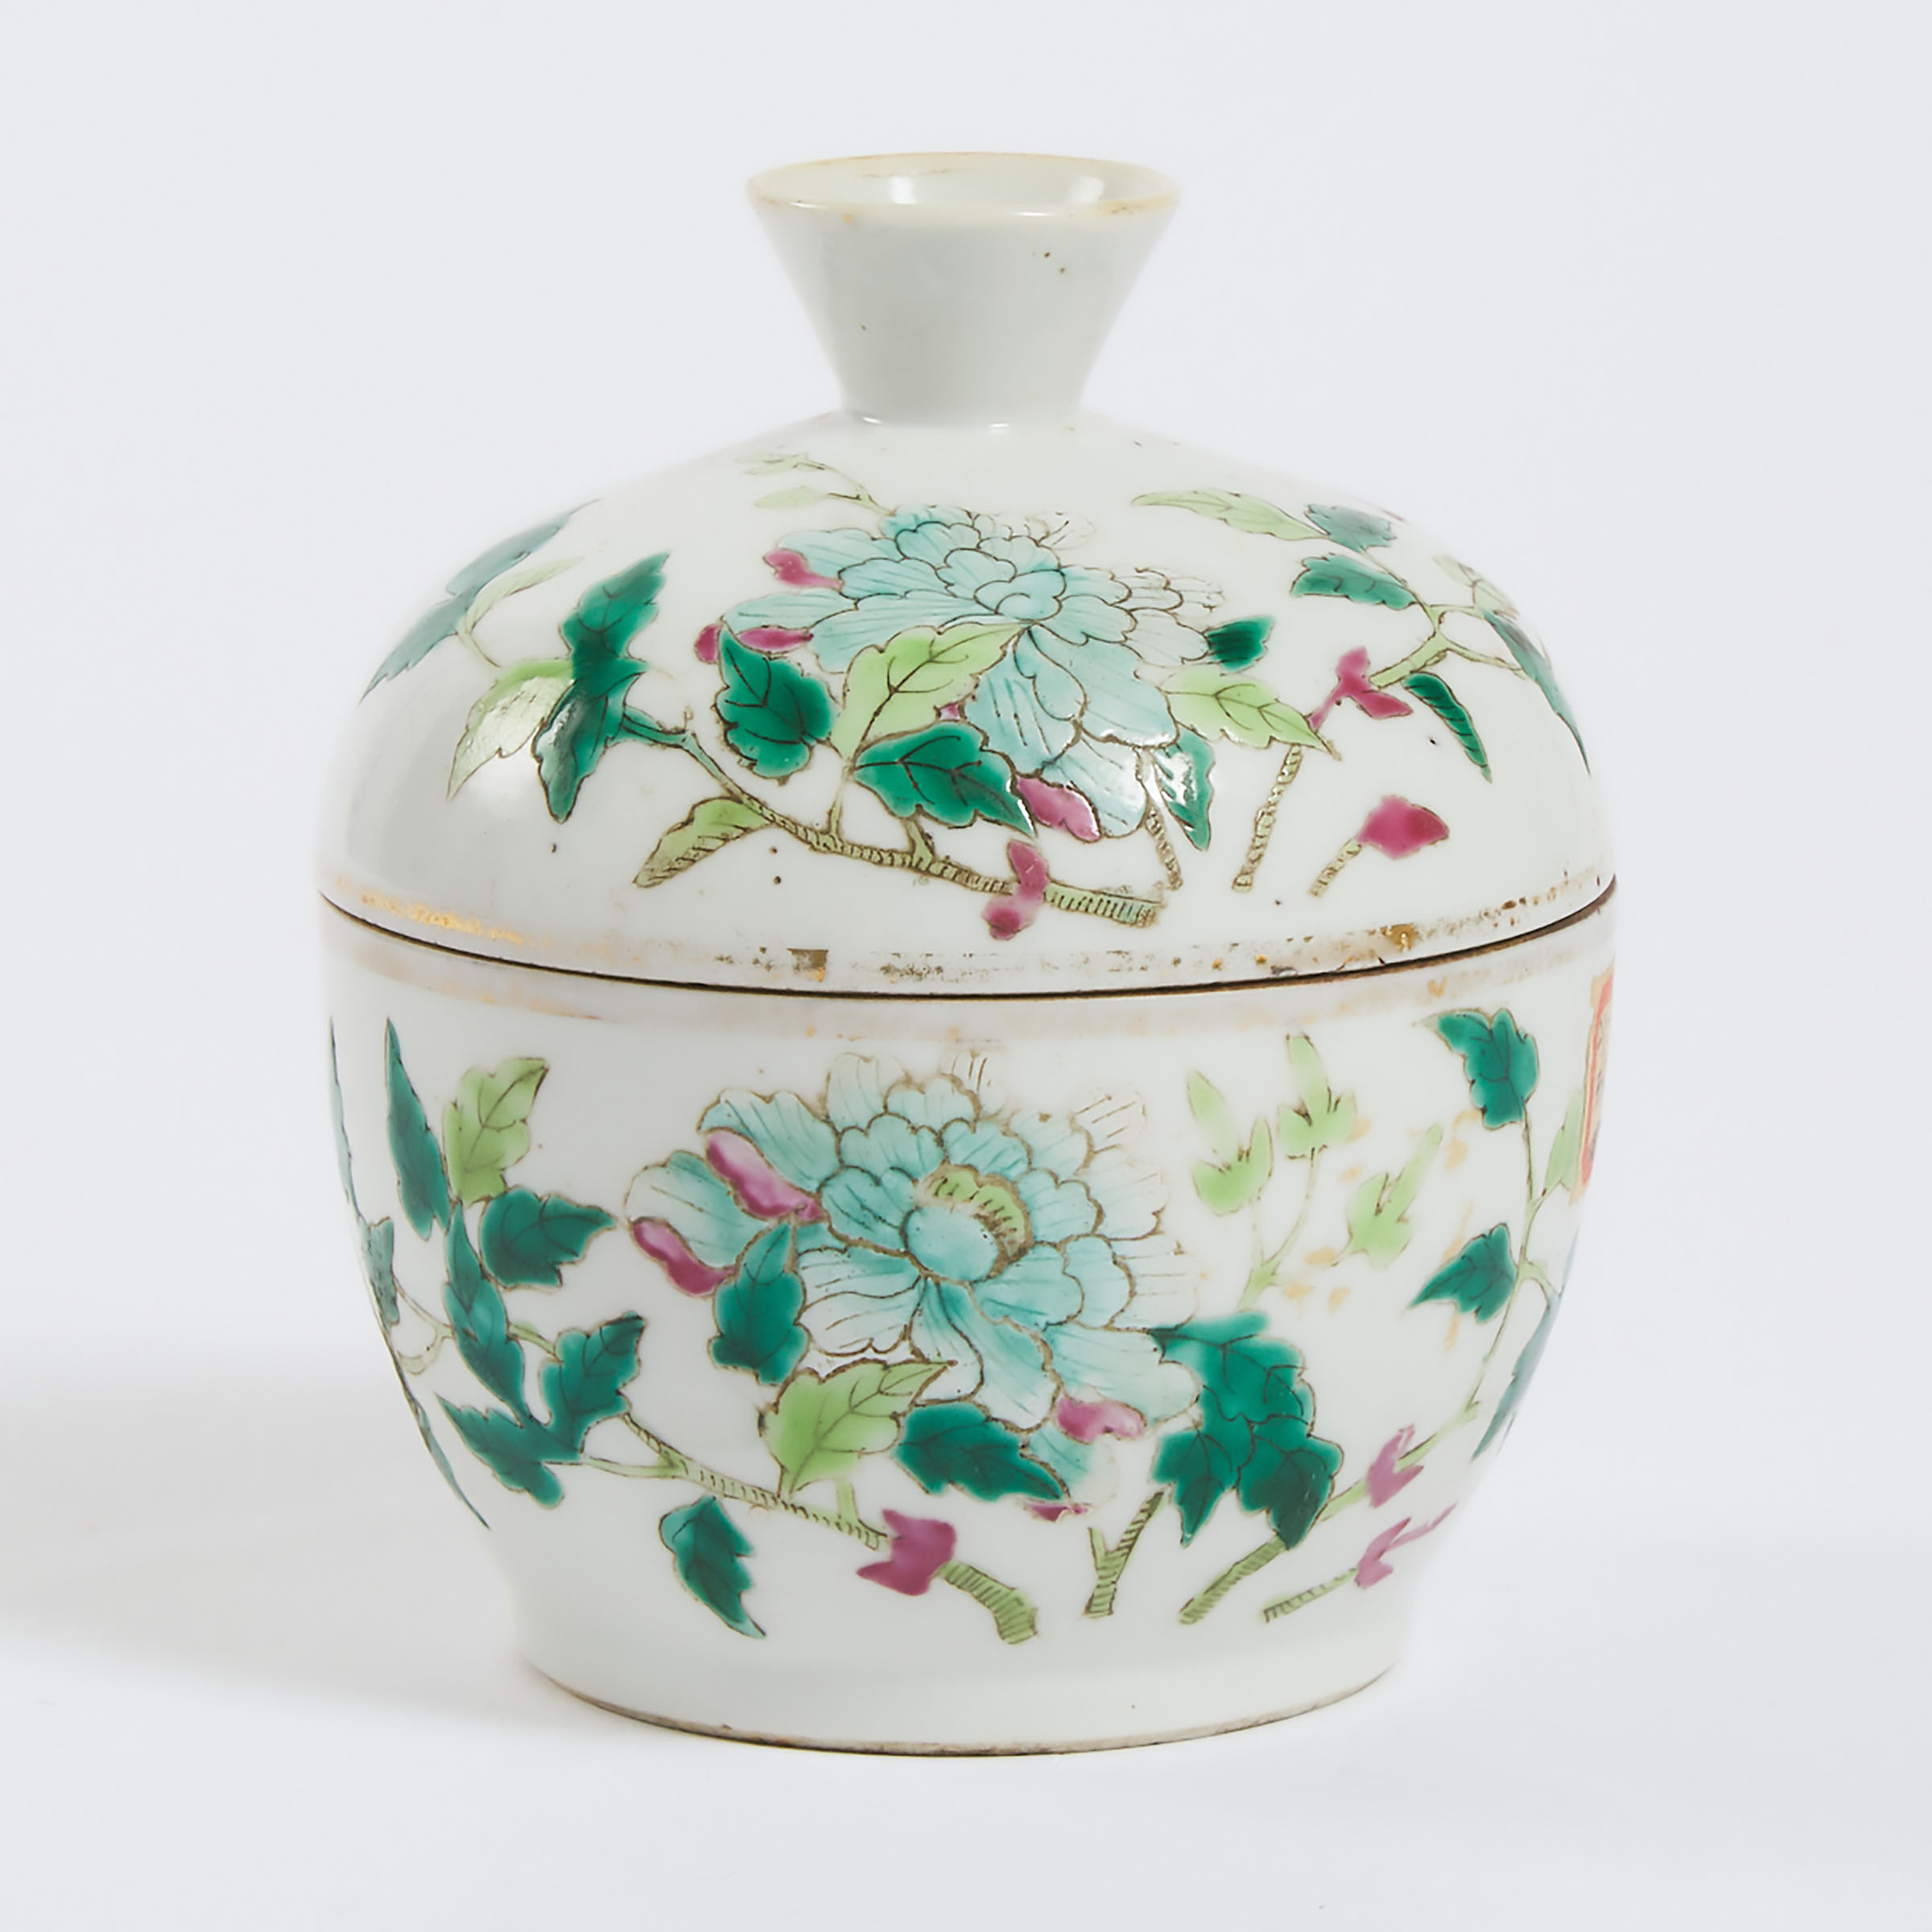 A Chinese Enameled Porcelain Bowl 3ac6fb